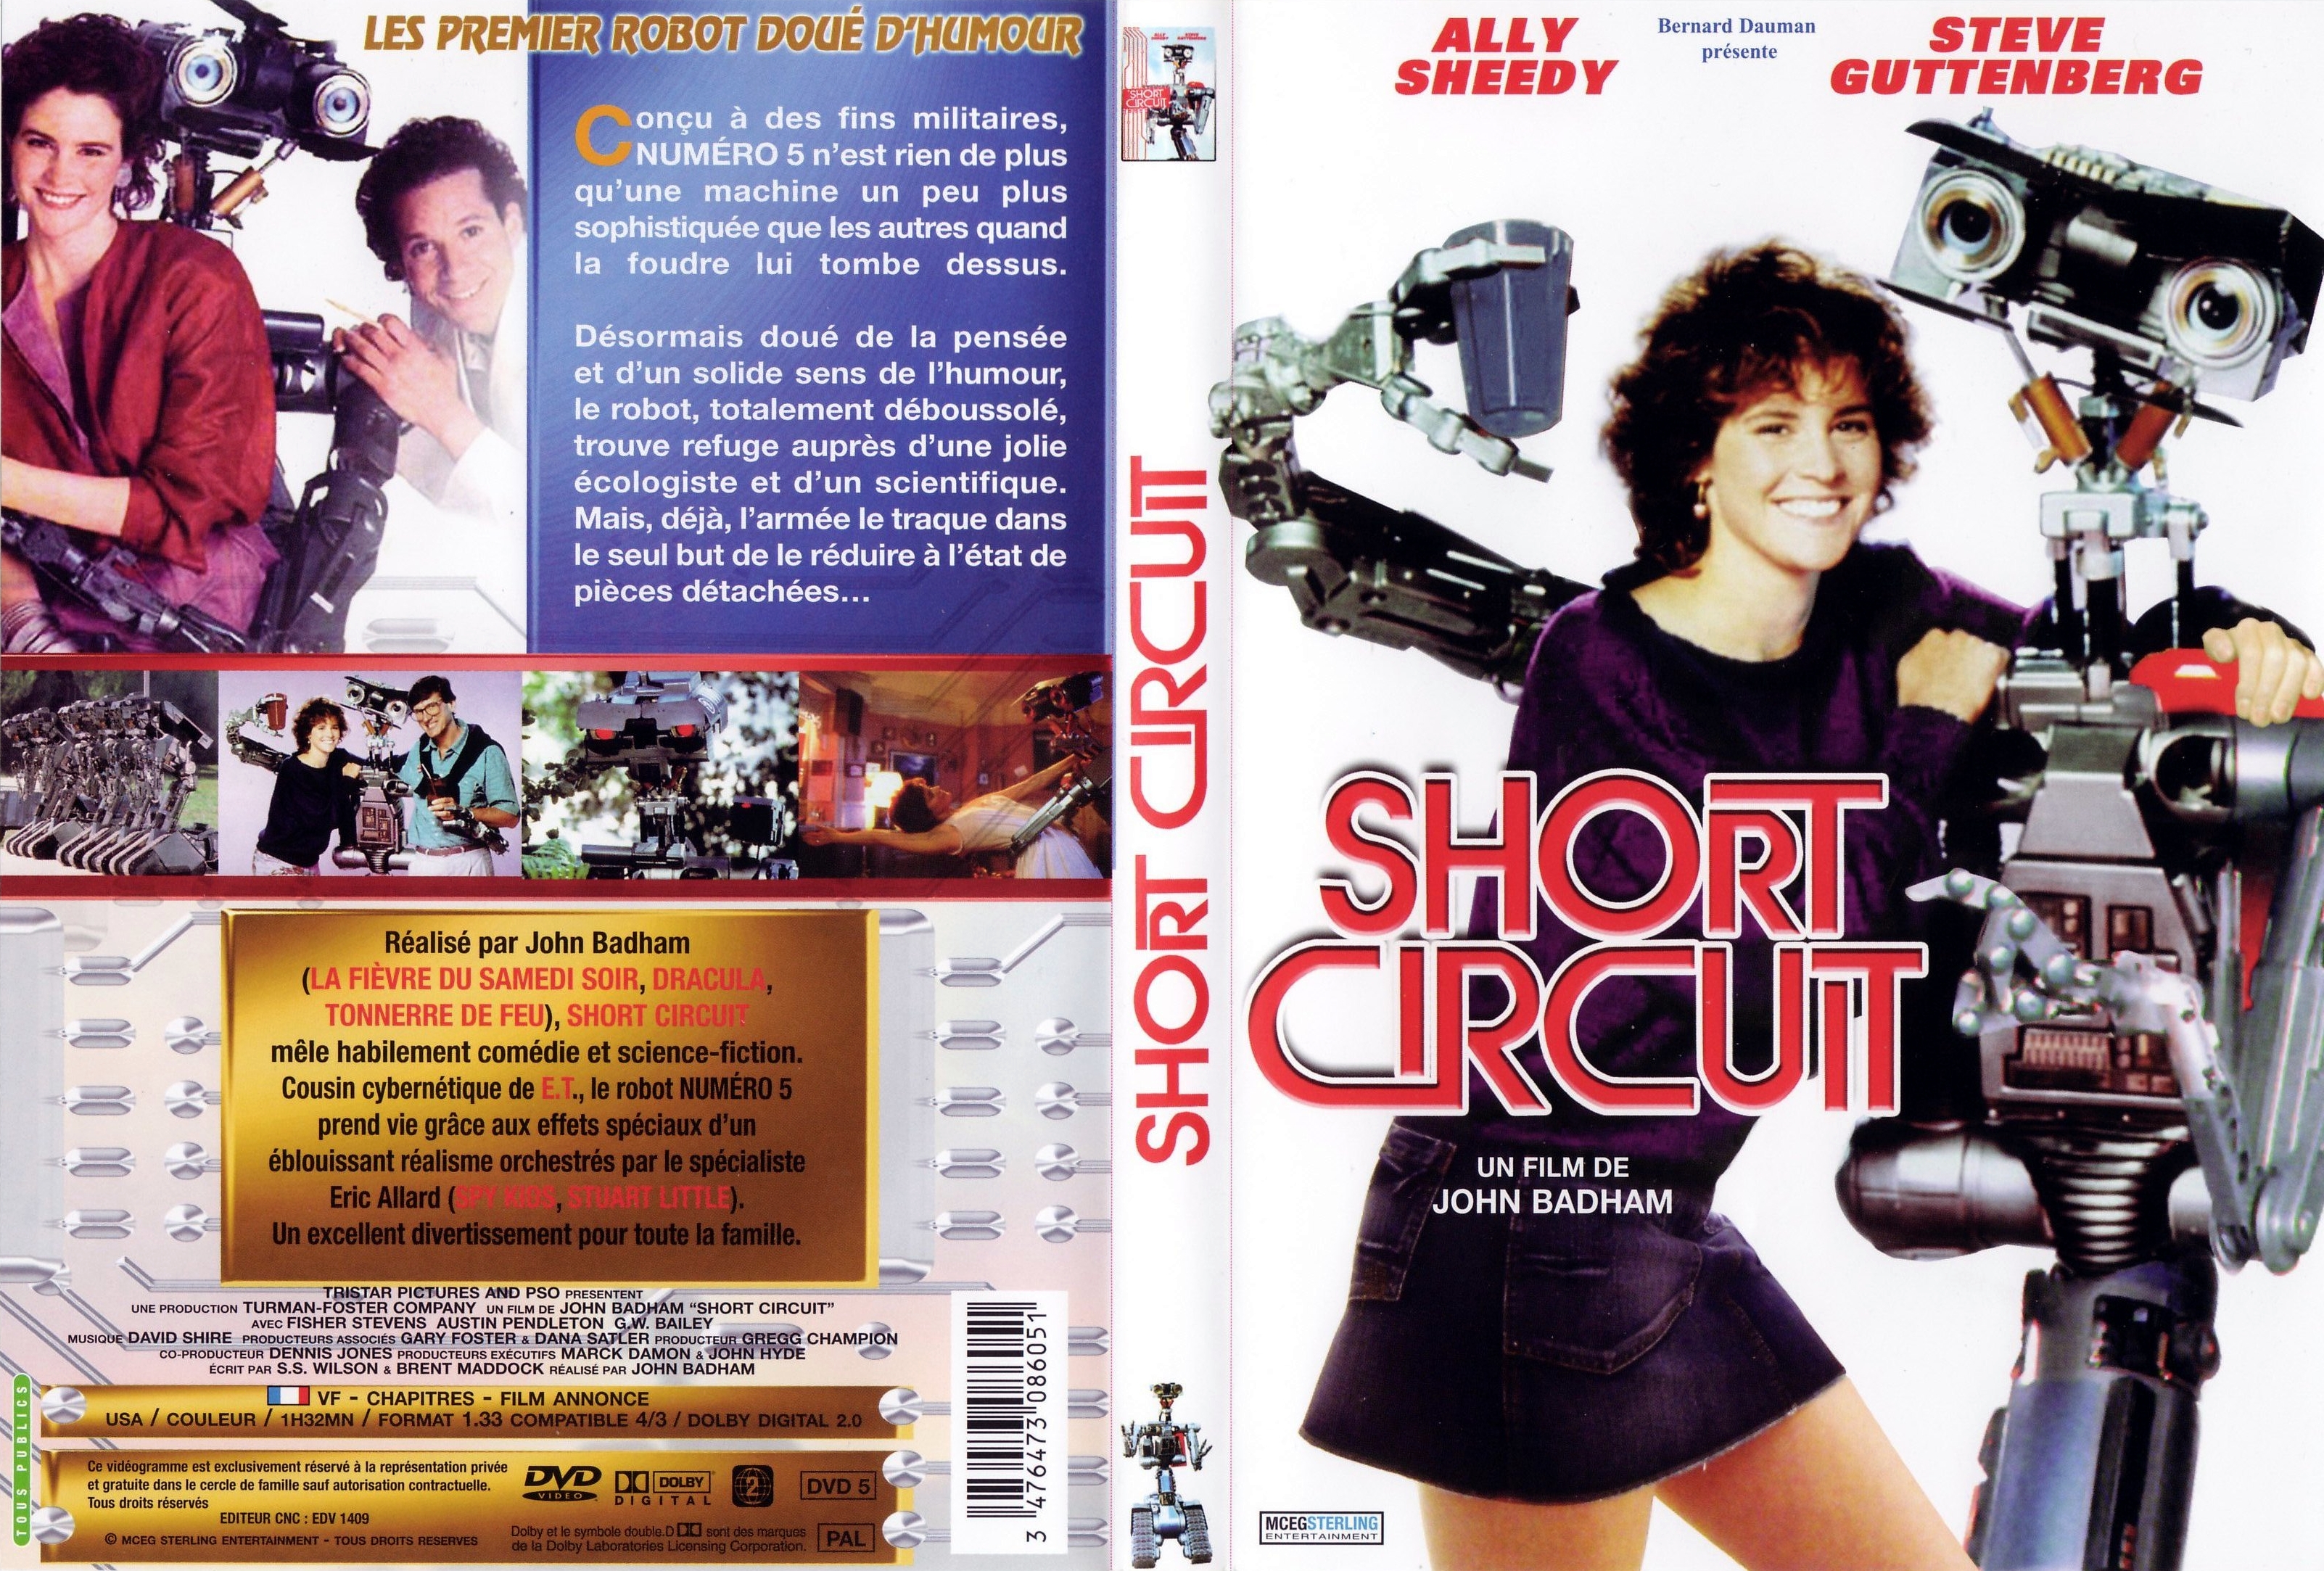 Jaquette DVD Short circuit v2